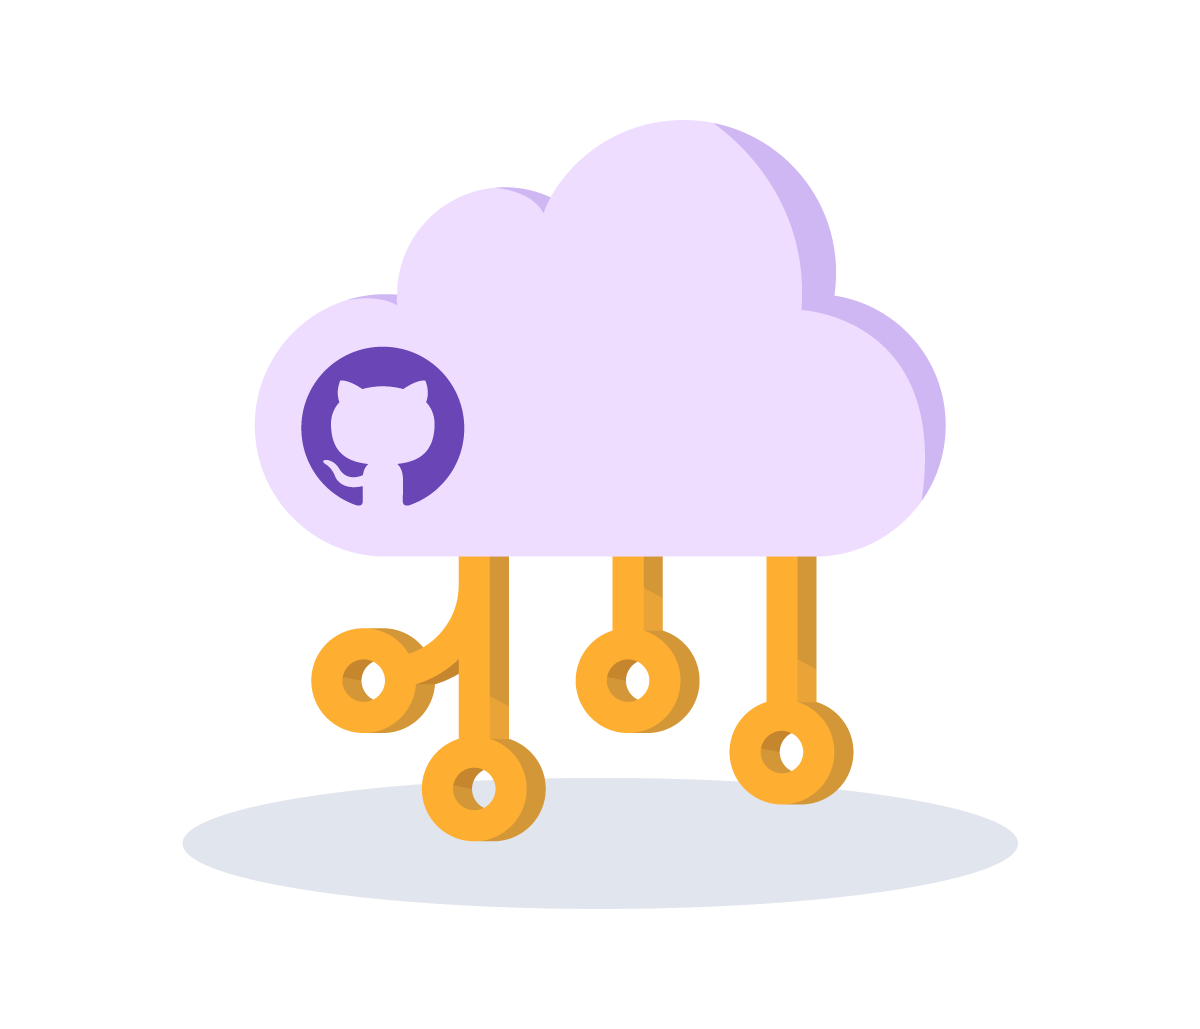 Hackathon in the Cloud logo - purple cloud featuring invertocat logo